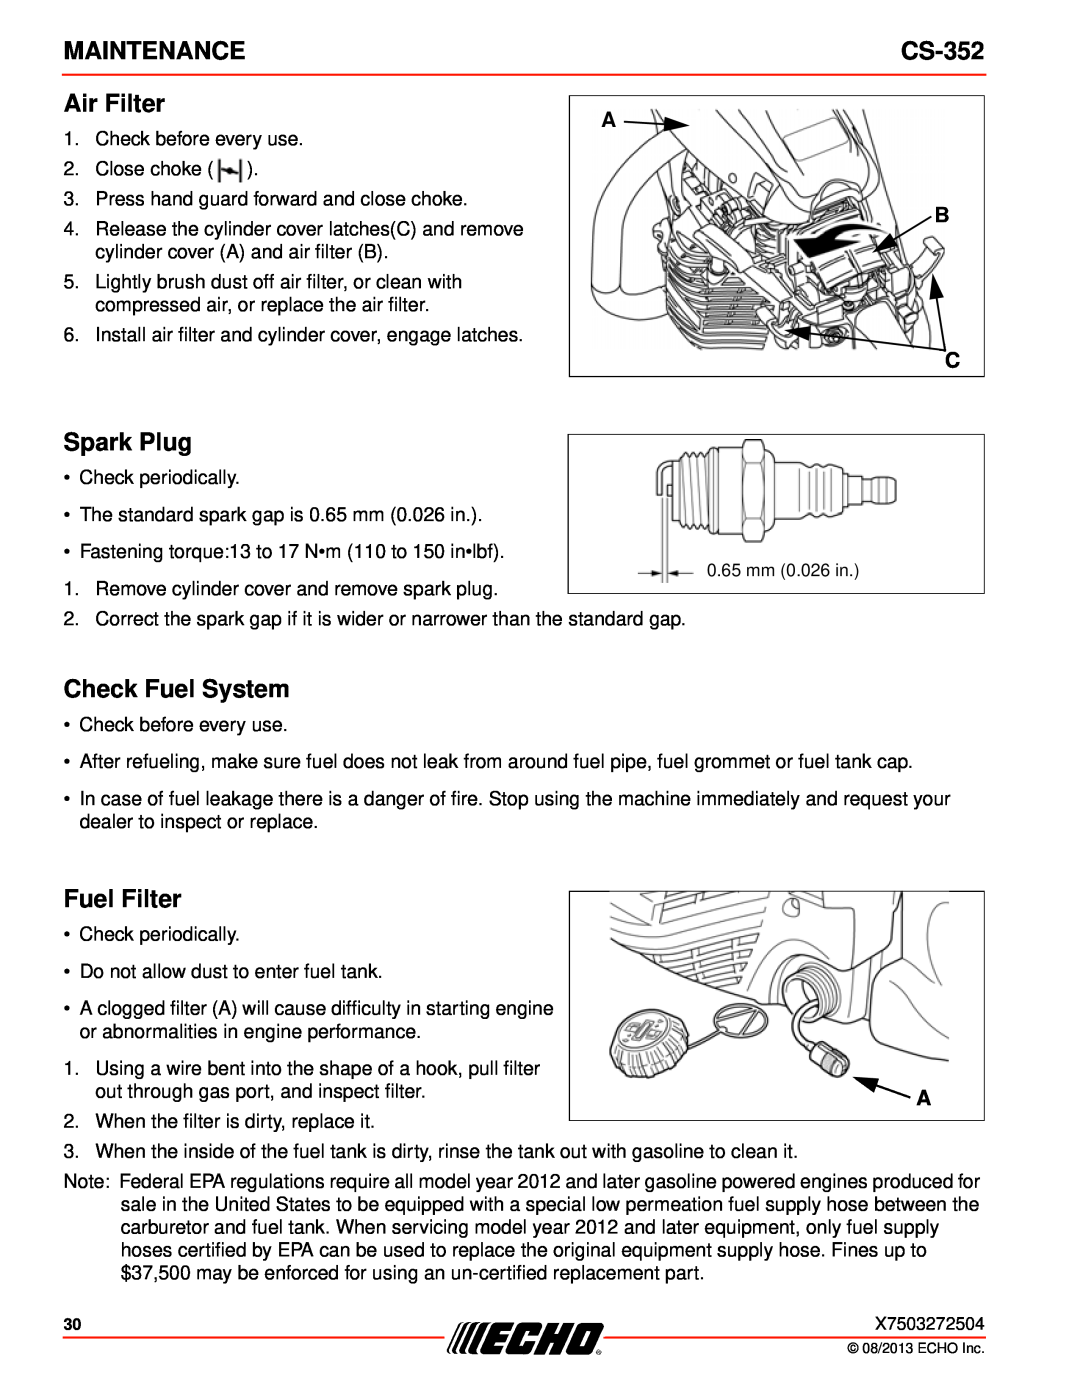 Echo CS-352 instruction manual Air Filter, Spark Plug, Check Fuel System, Fuel Filter, A B C, Maintenance 